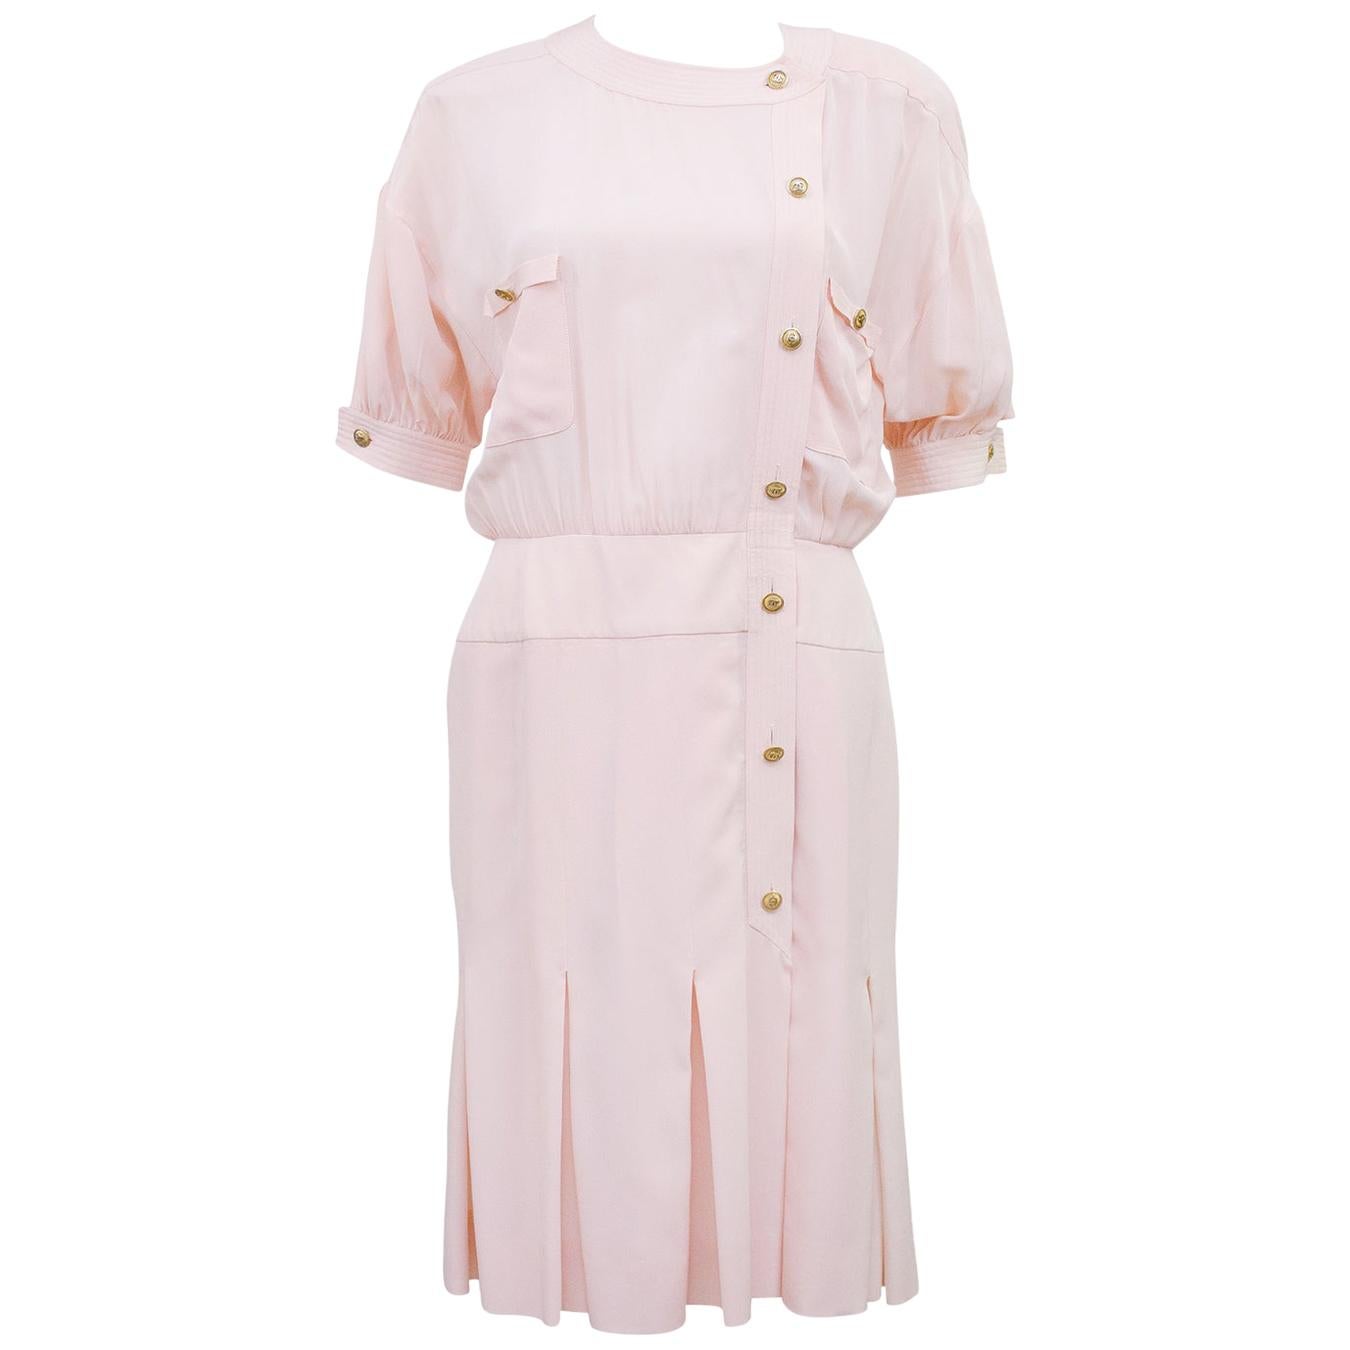 1980s Chanel Pale Pink Silk/Satin Day Dress 